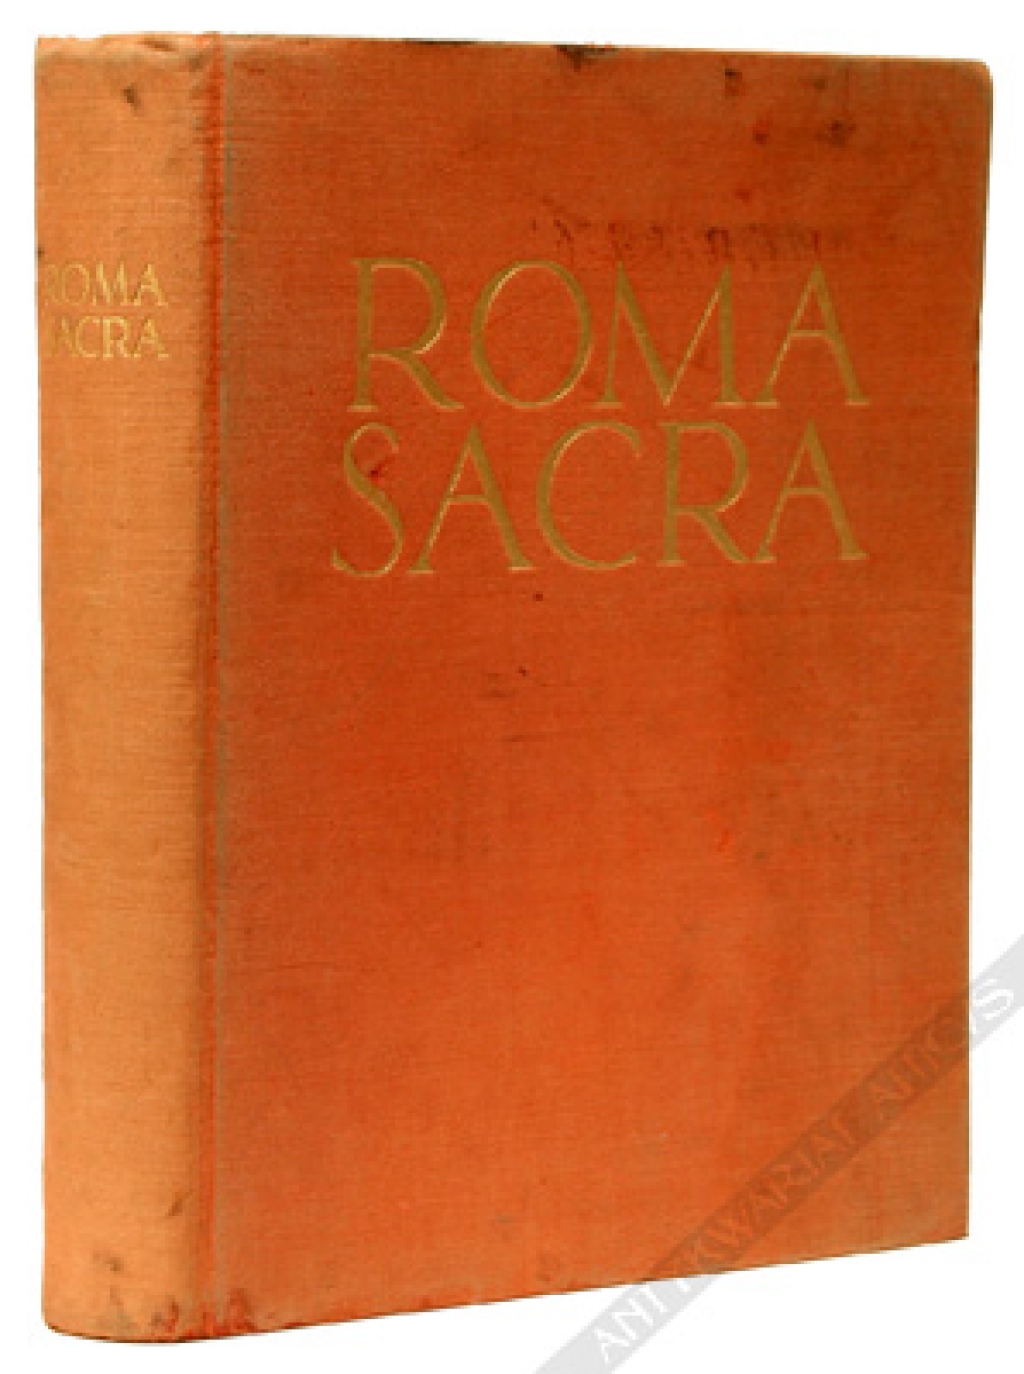 Roma Sacra.[dodatek] Tekst polski do dzieła Roma Sacra.